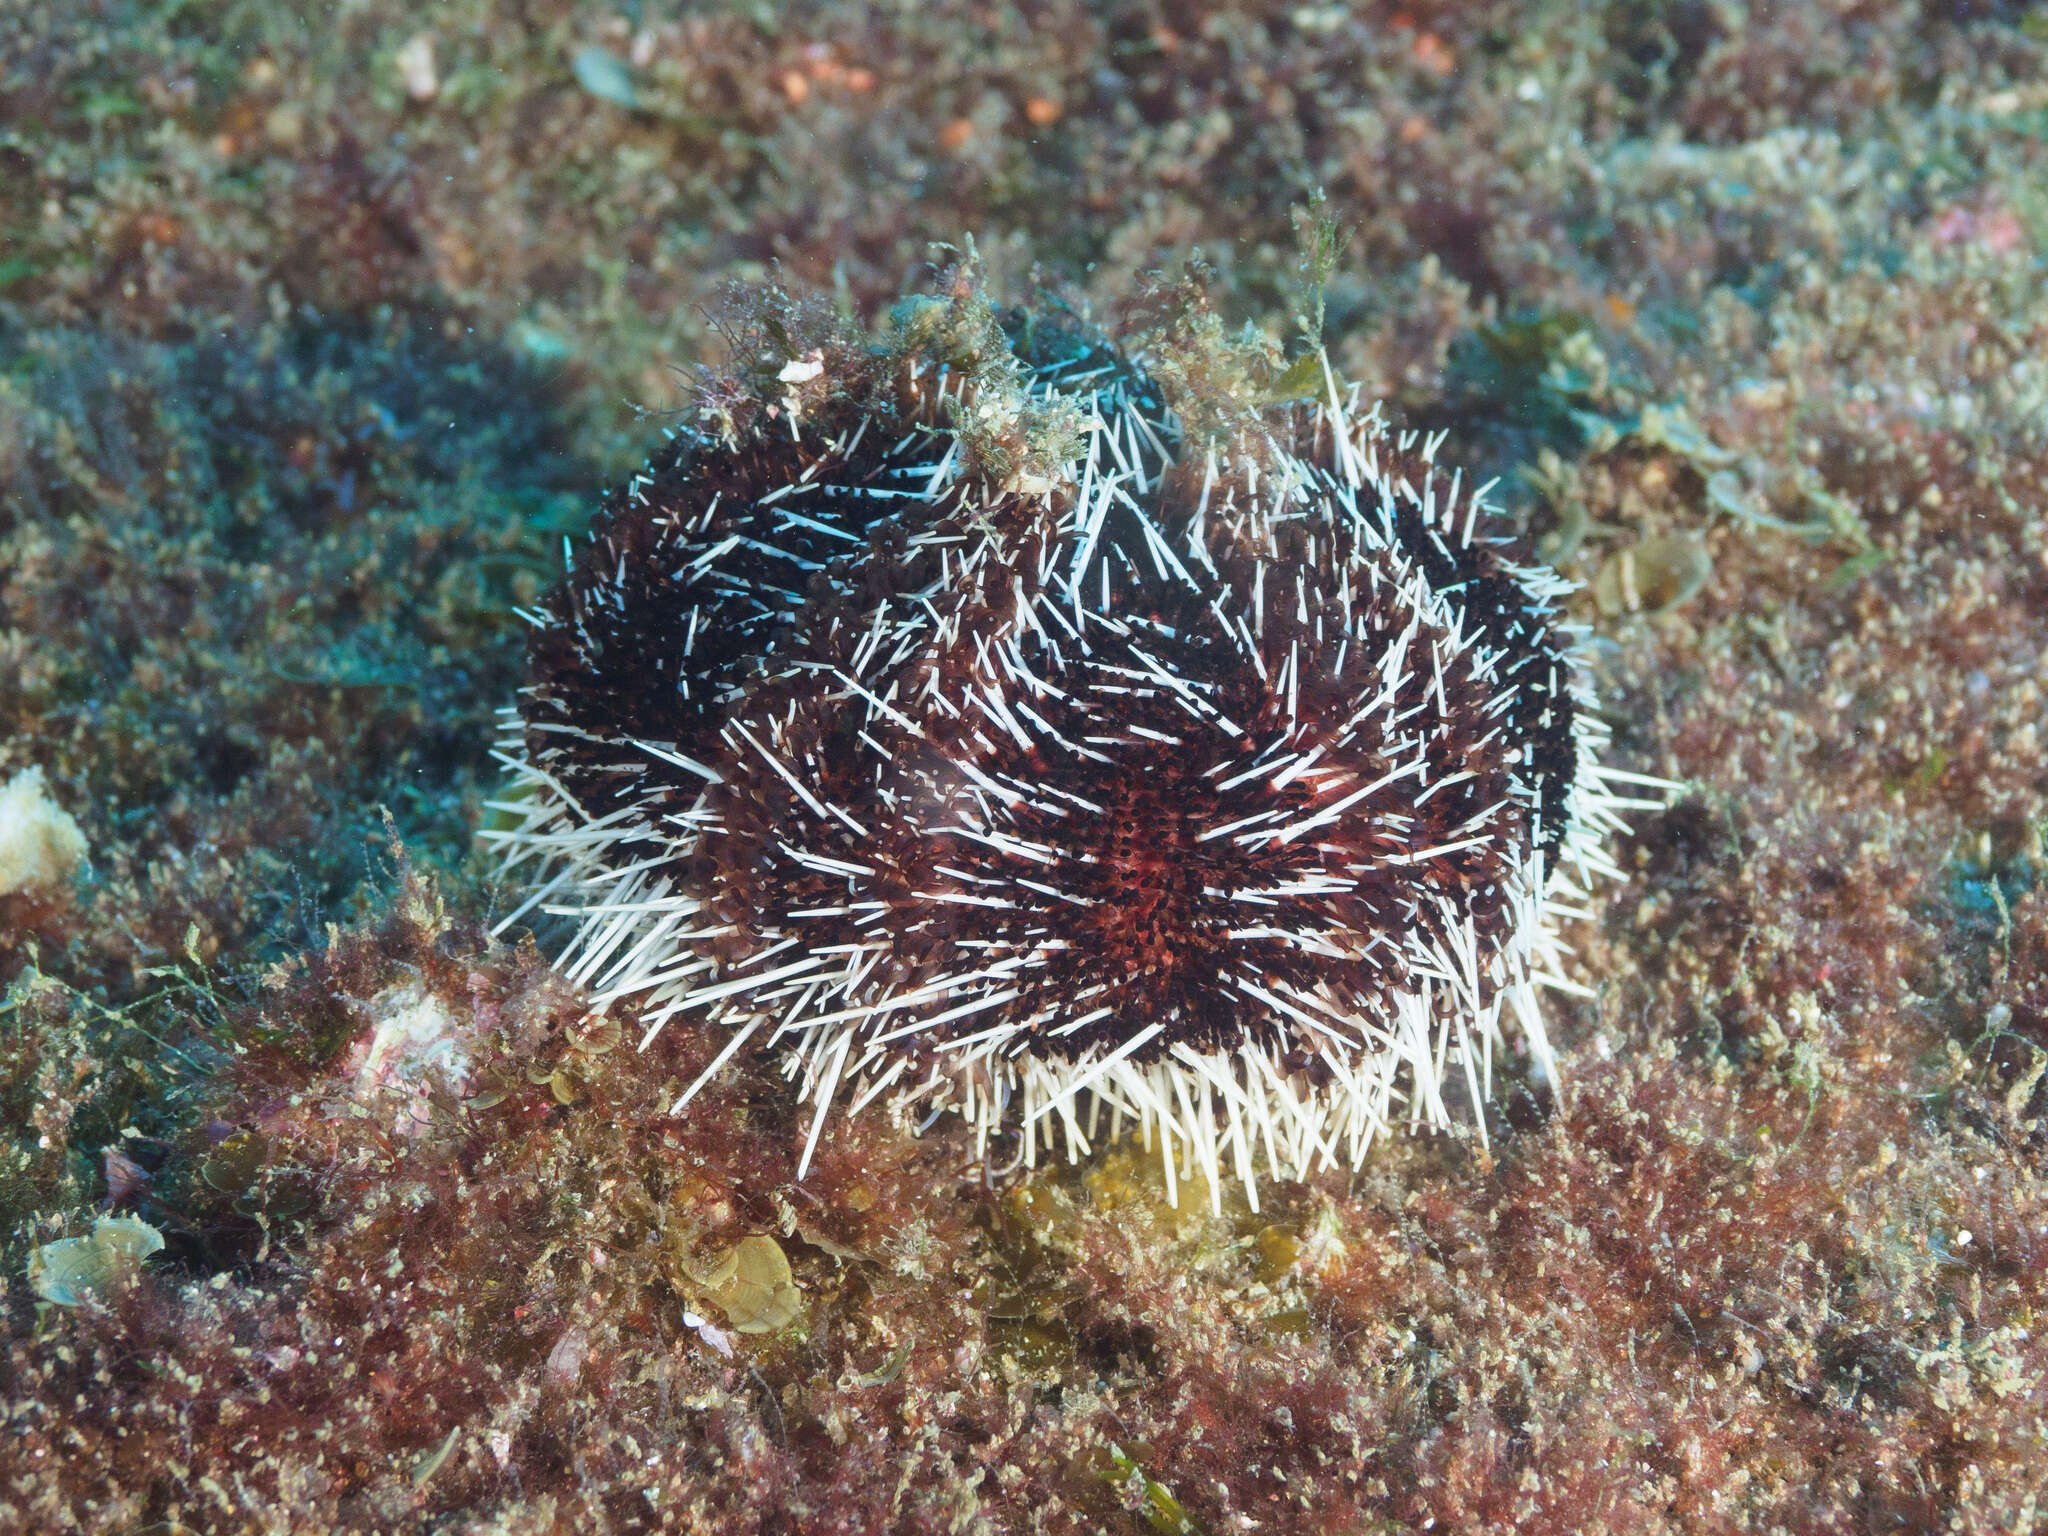 Image of Lamington urchin